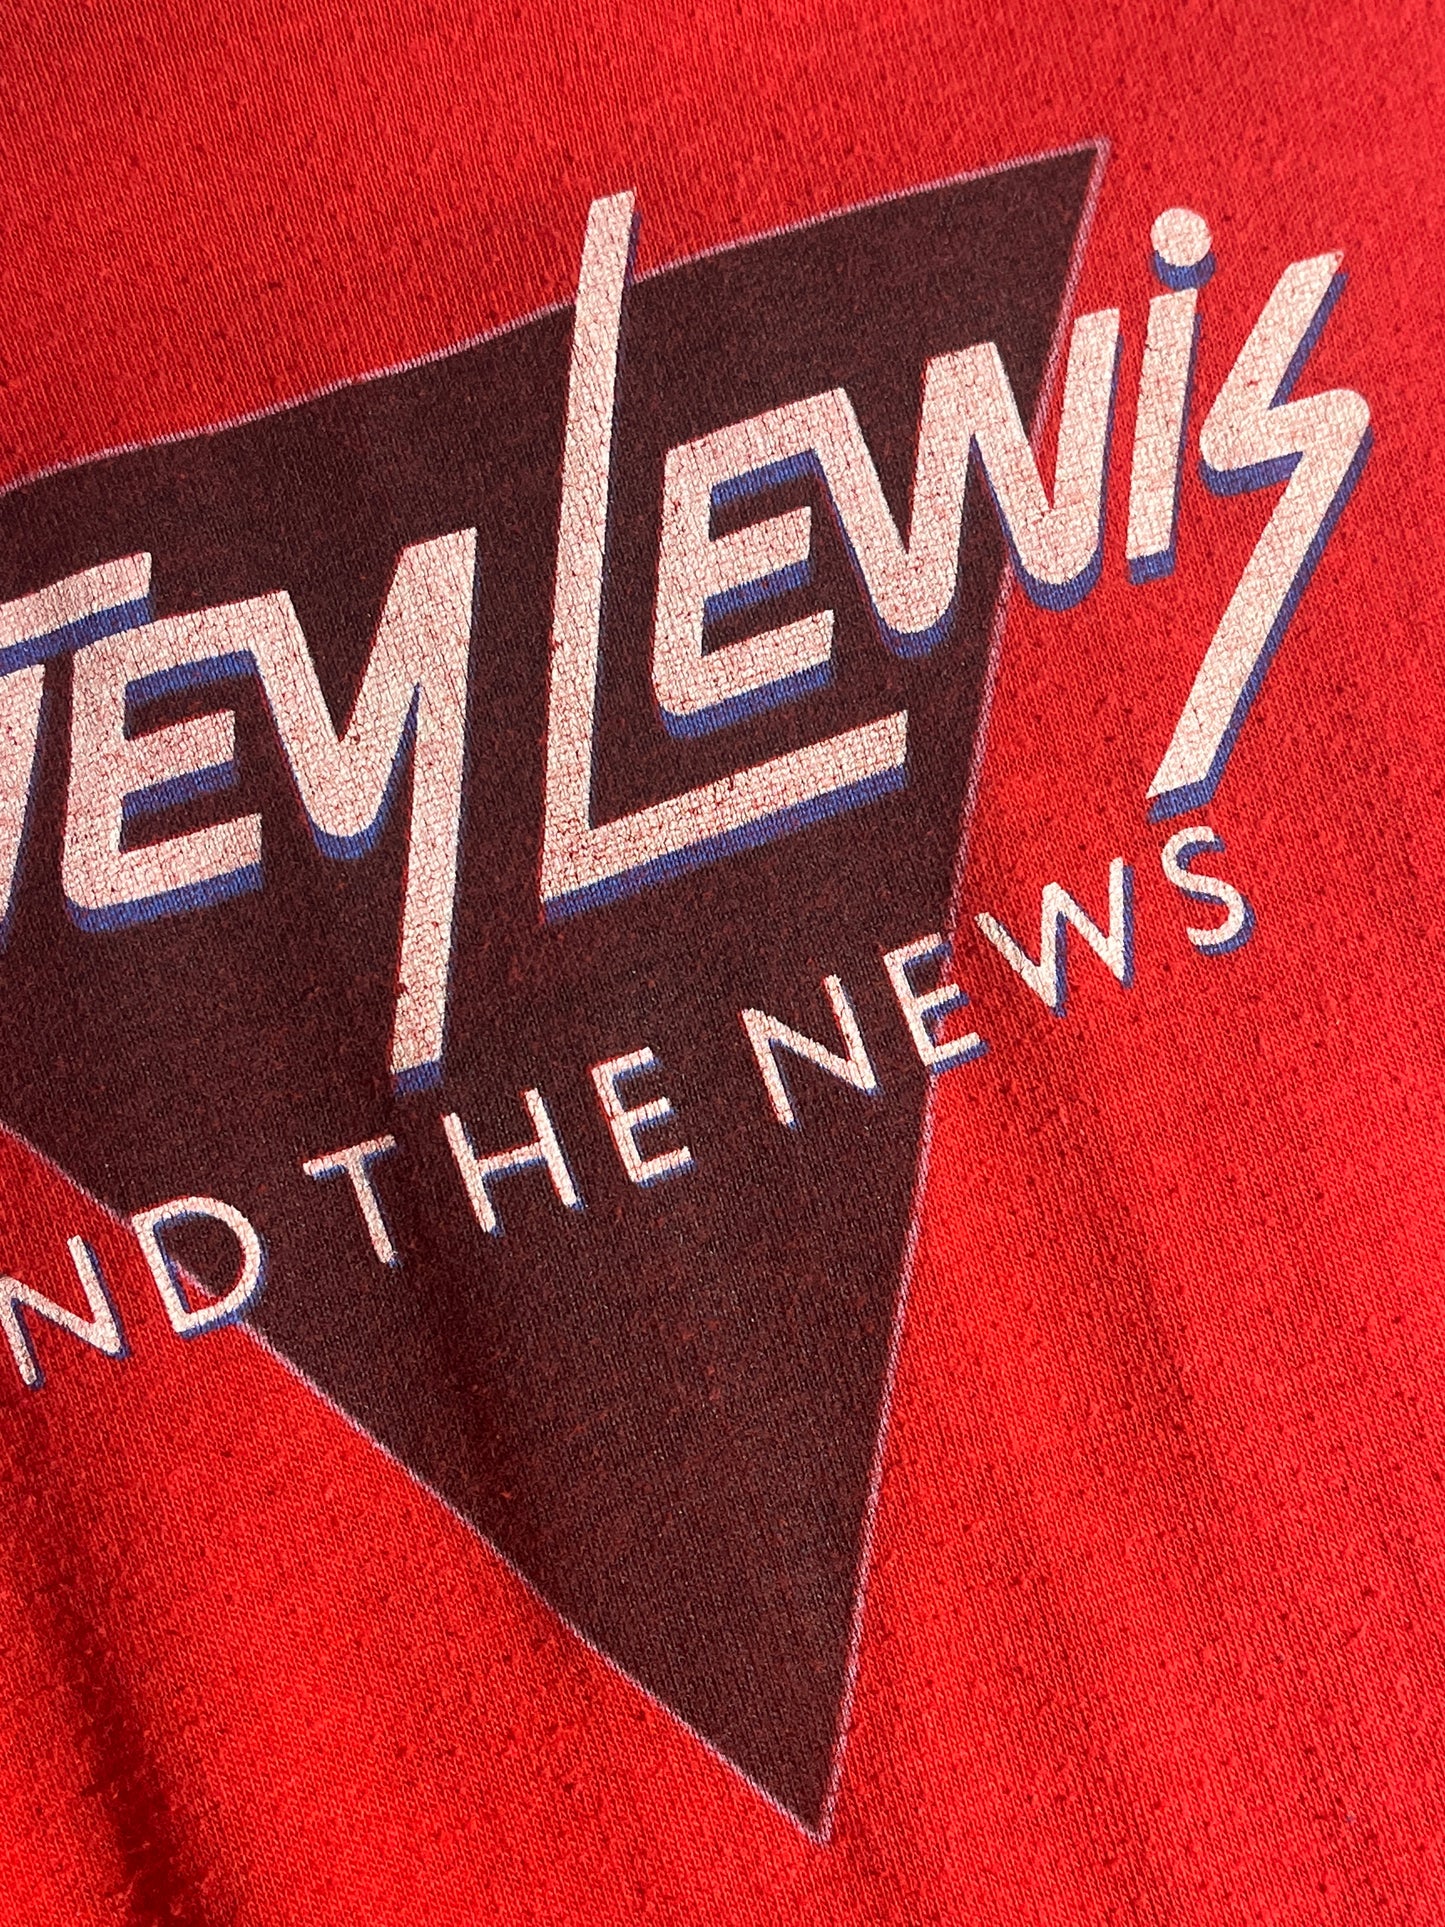 Vintage Huey Lewis and the News